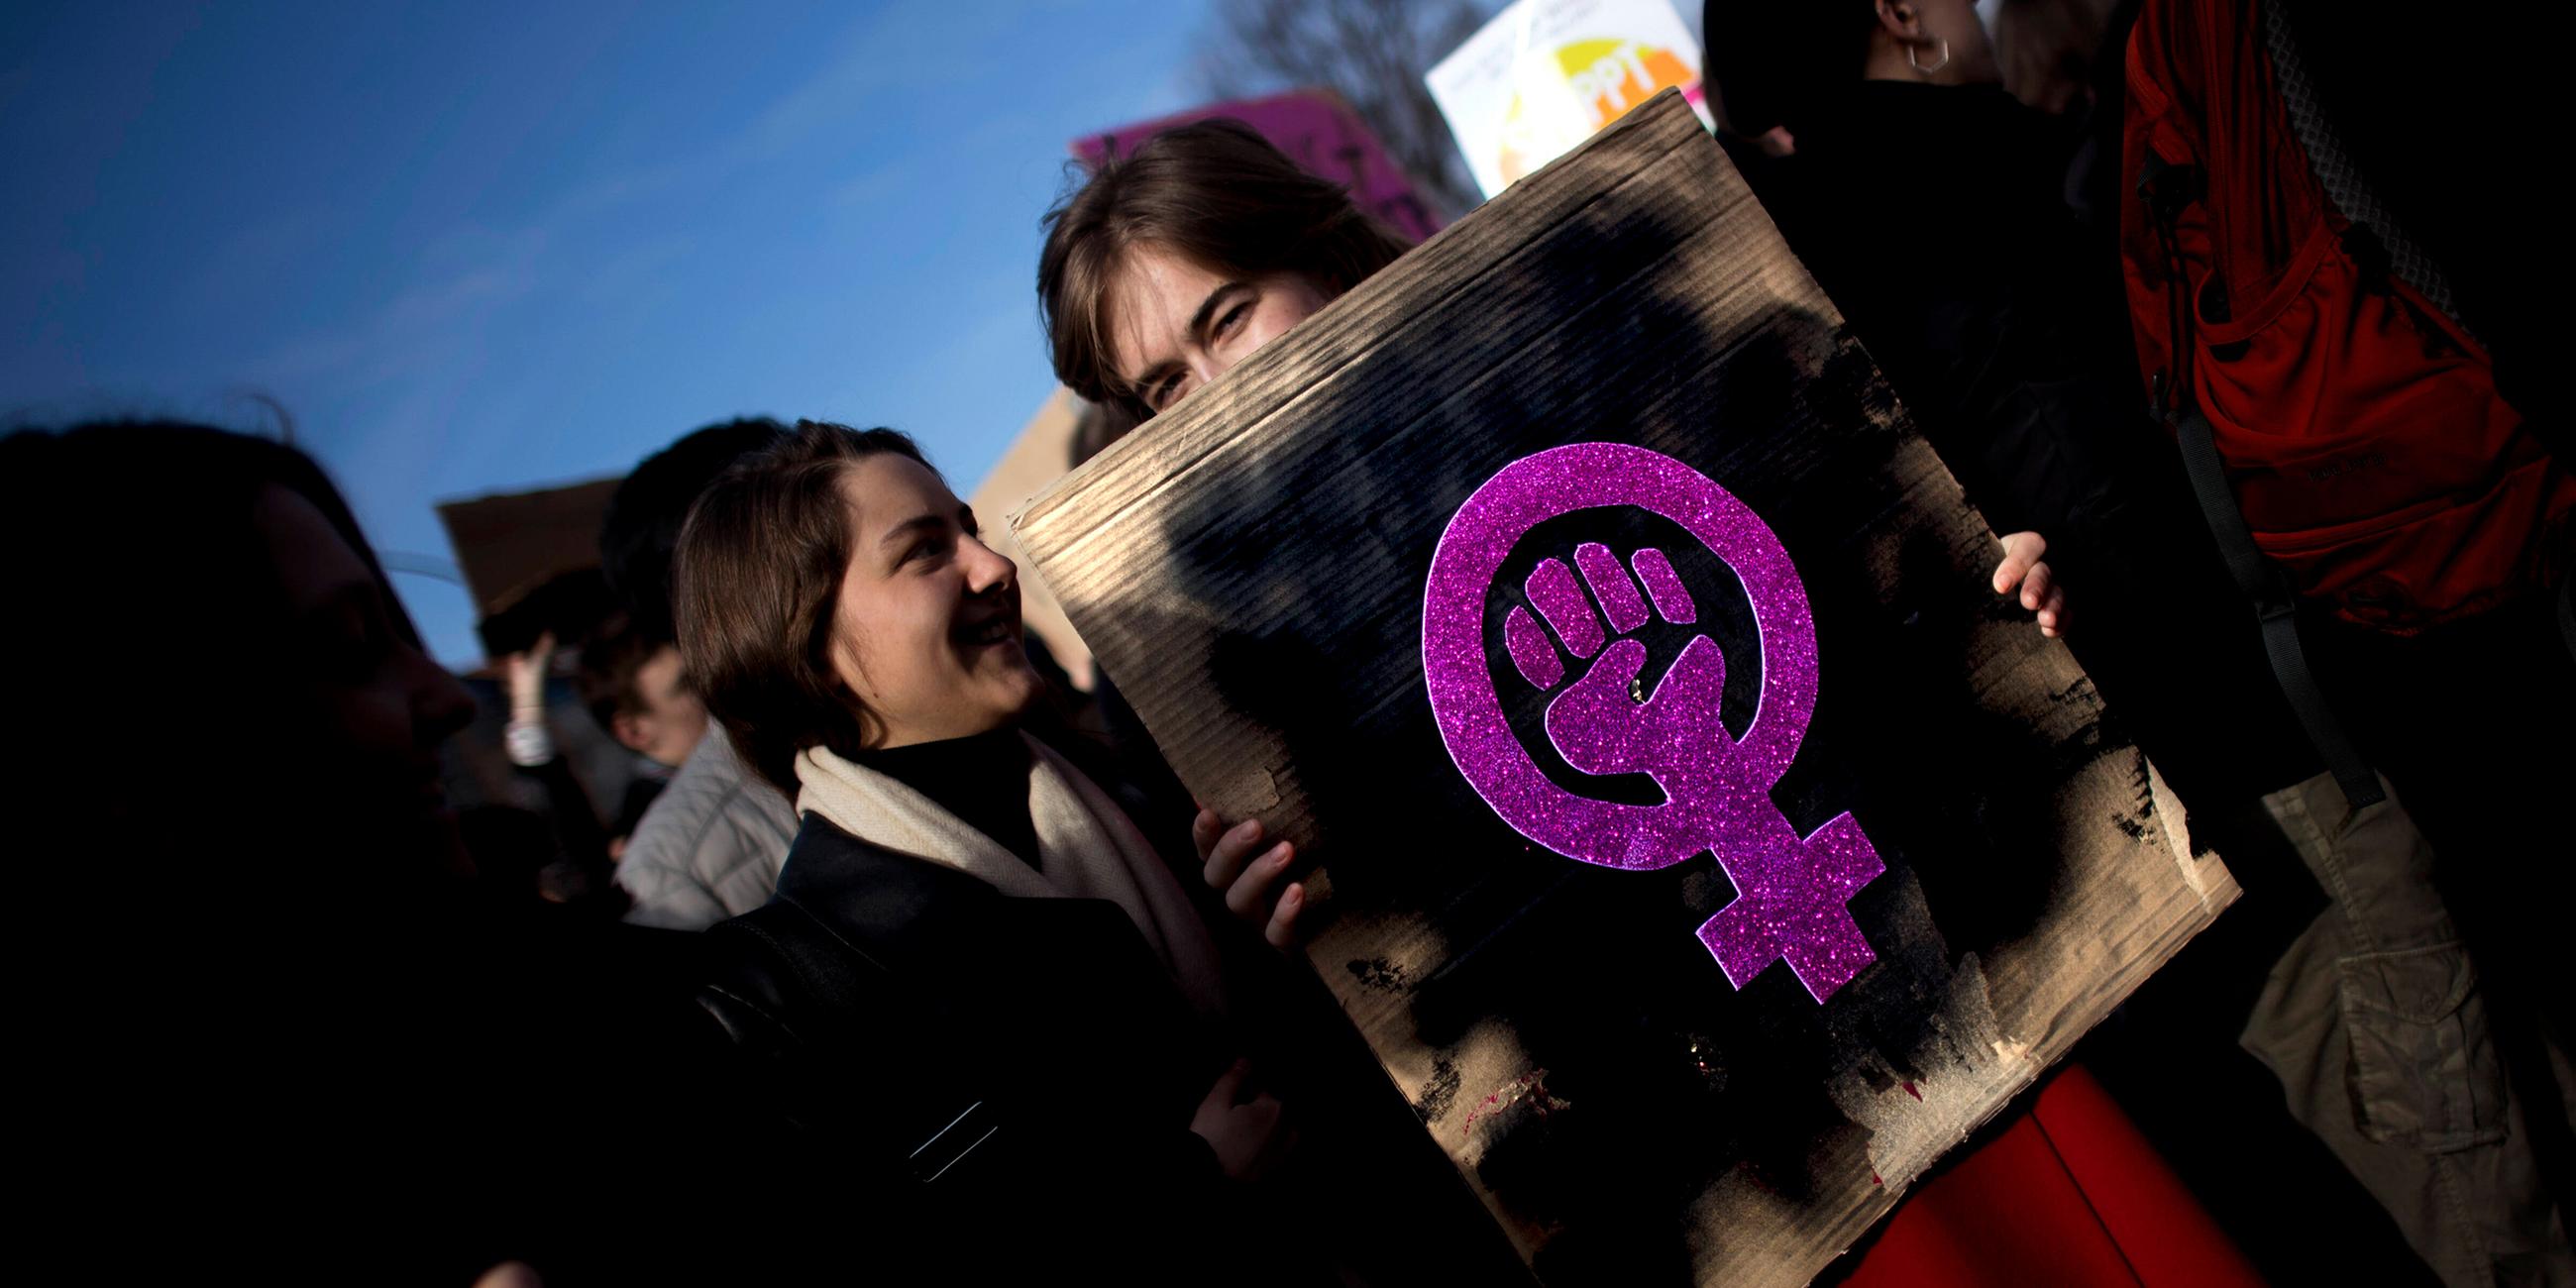 Demonstranten mit dem Frauenpower- Symbol 